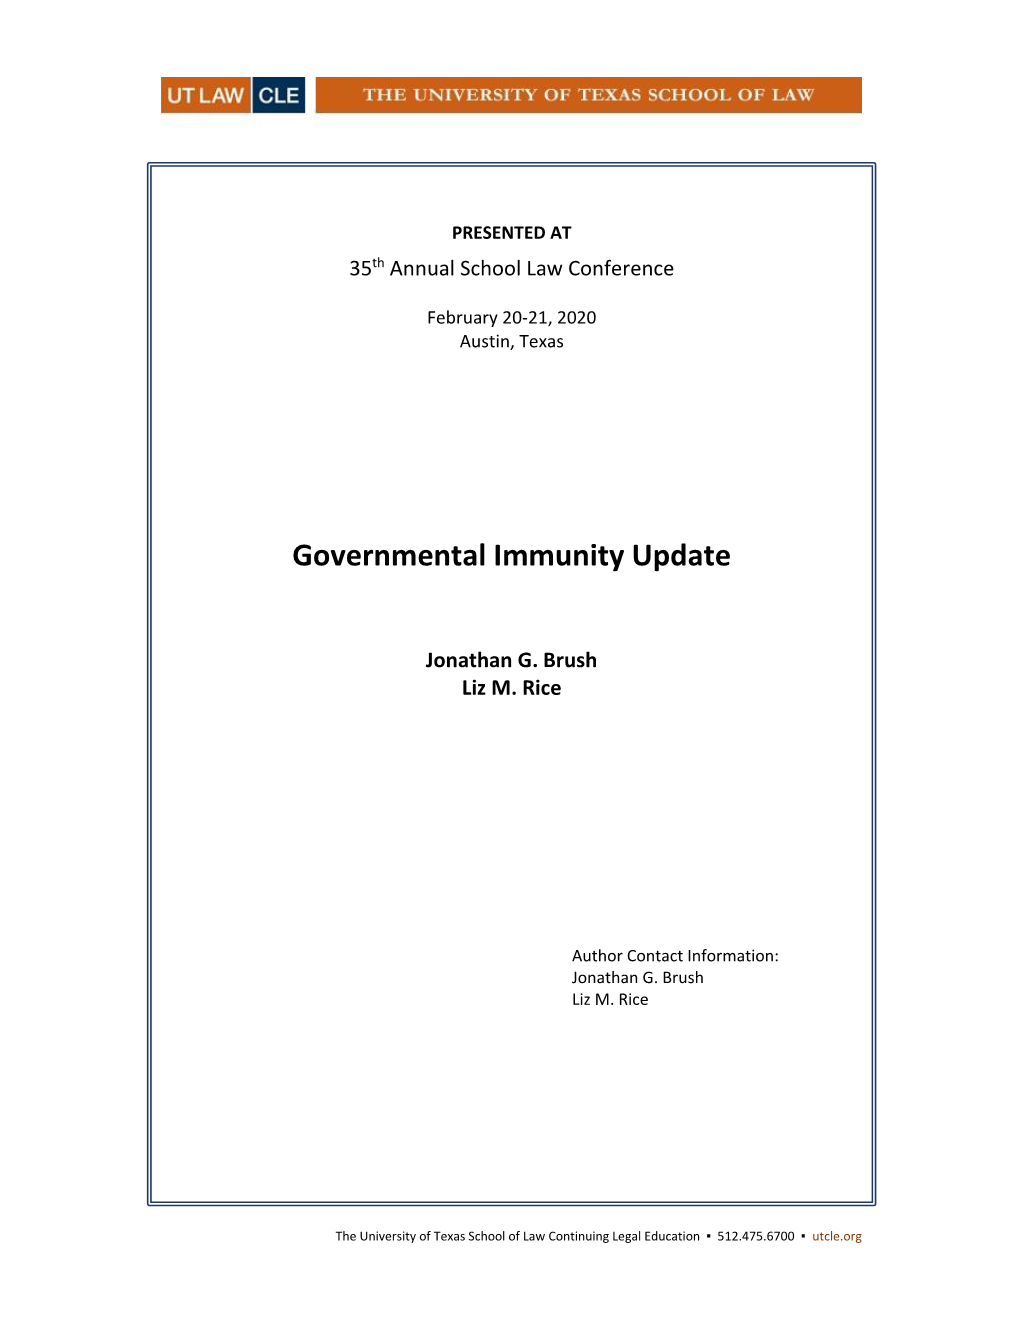 Governmental Immunity Update